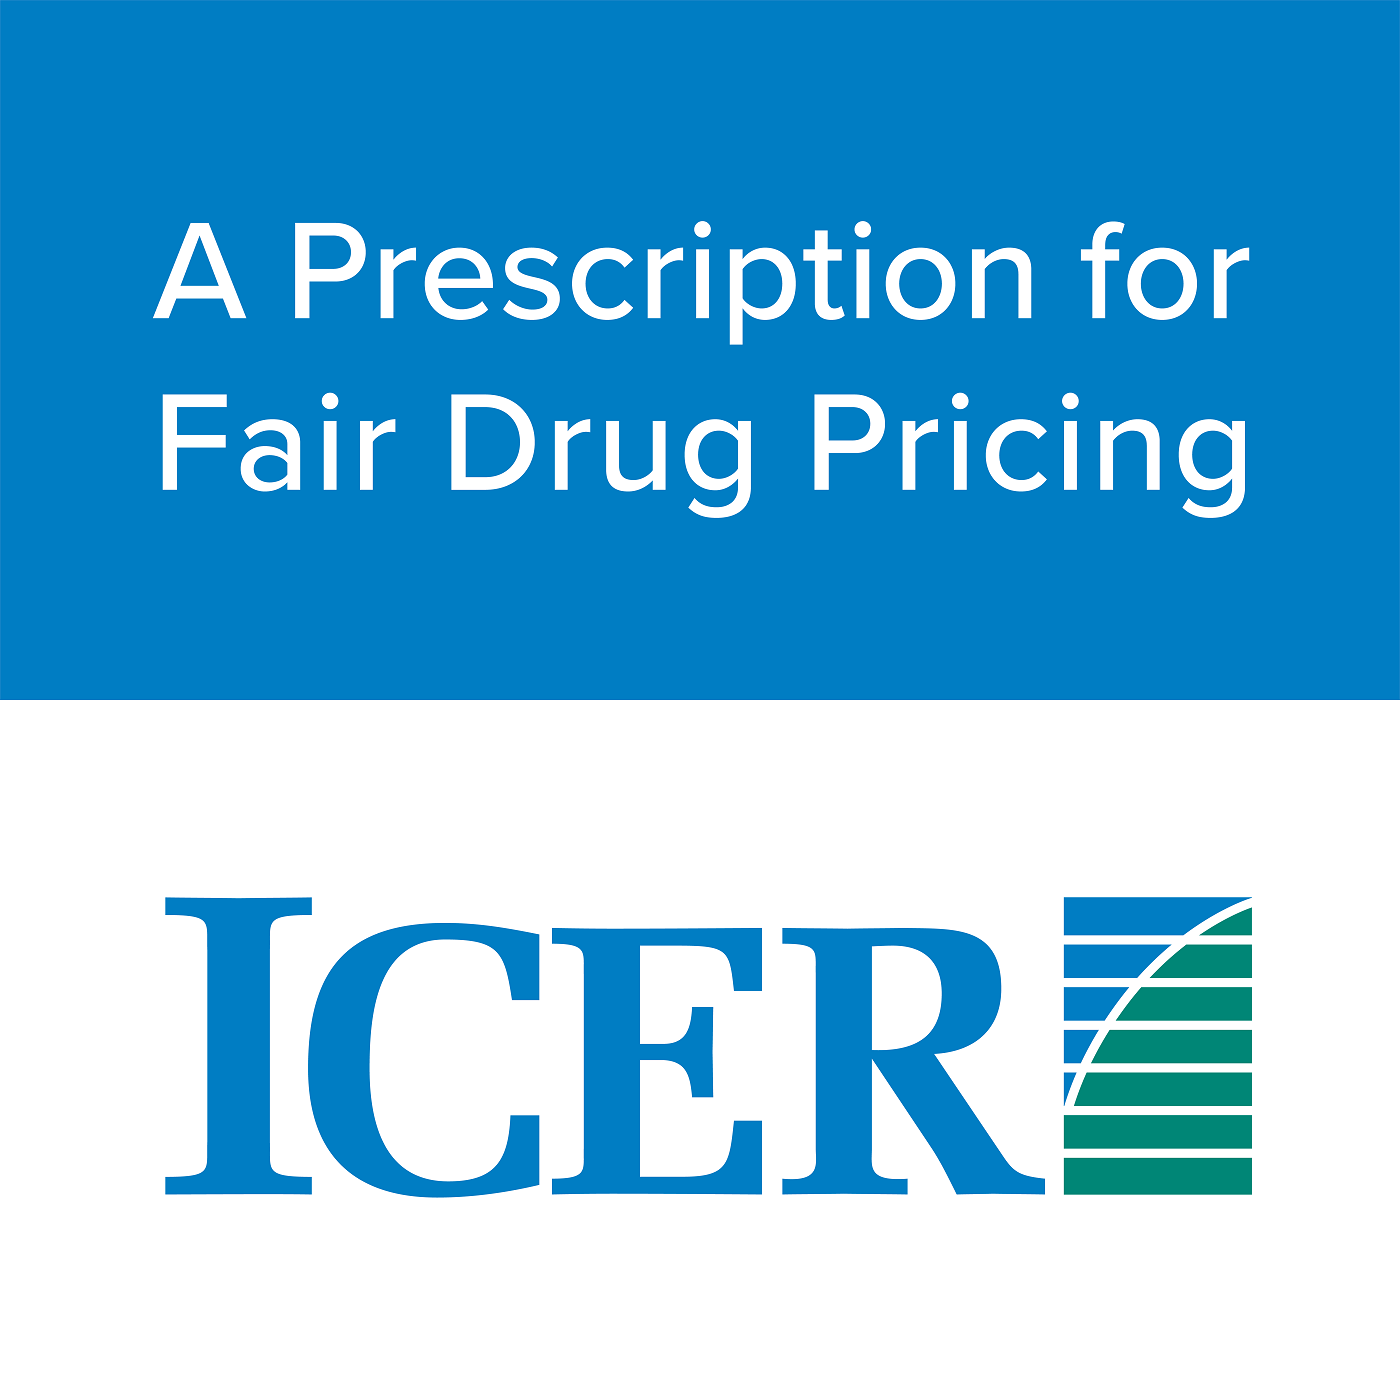 A Prescription for Fair Drug Pricing